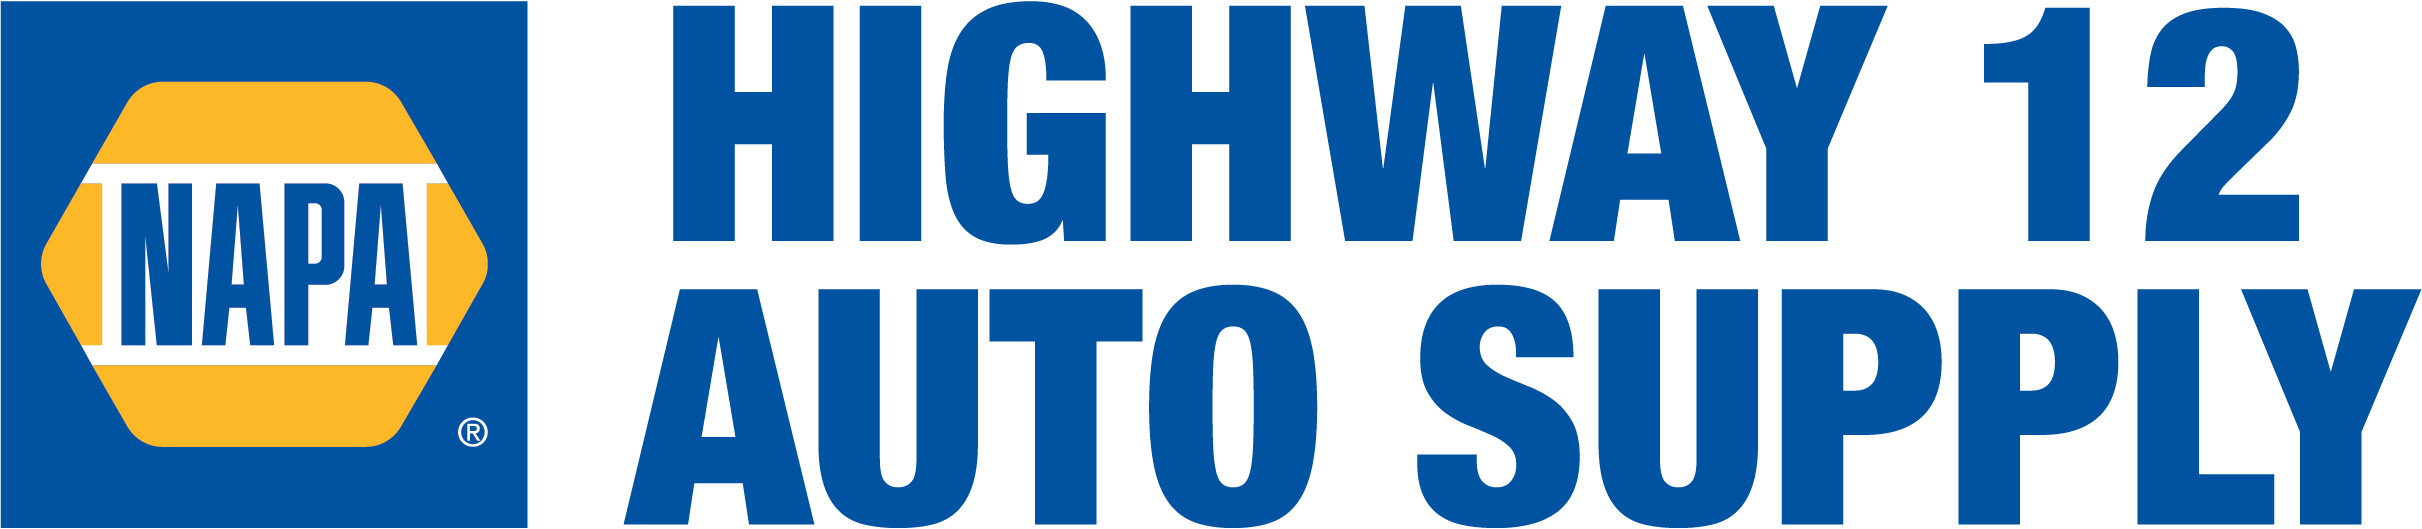 Highway 12 Auto Supply logo